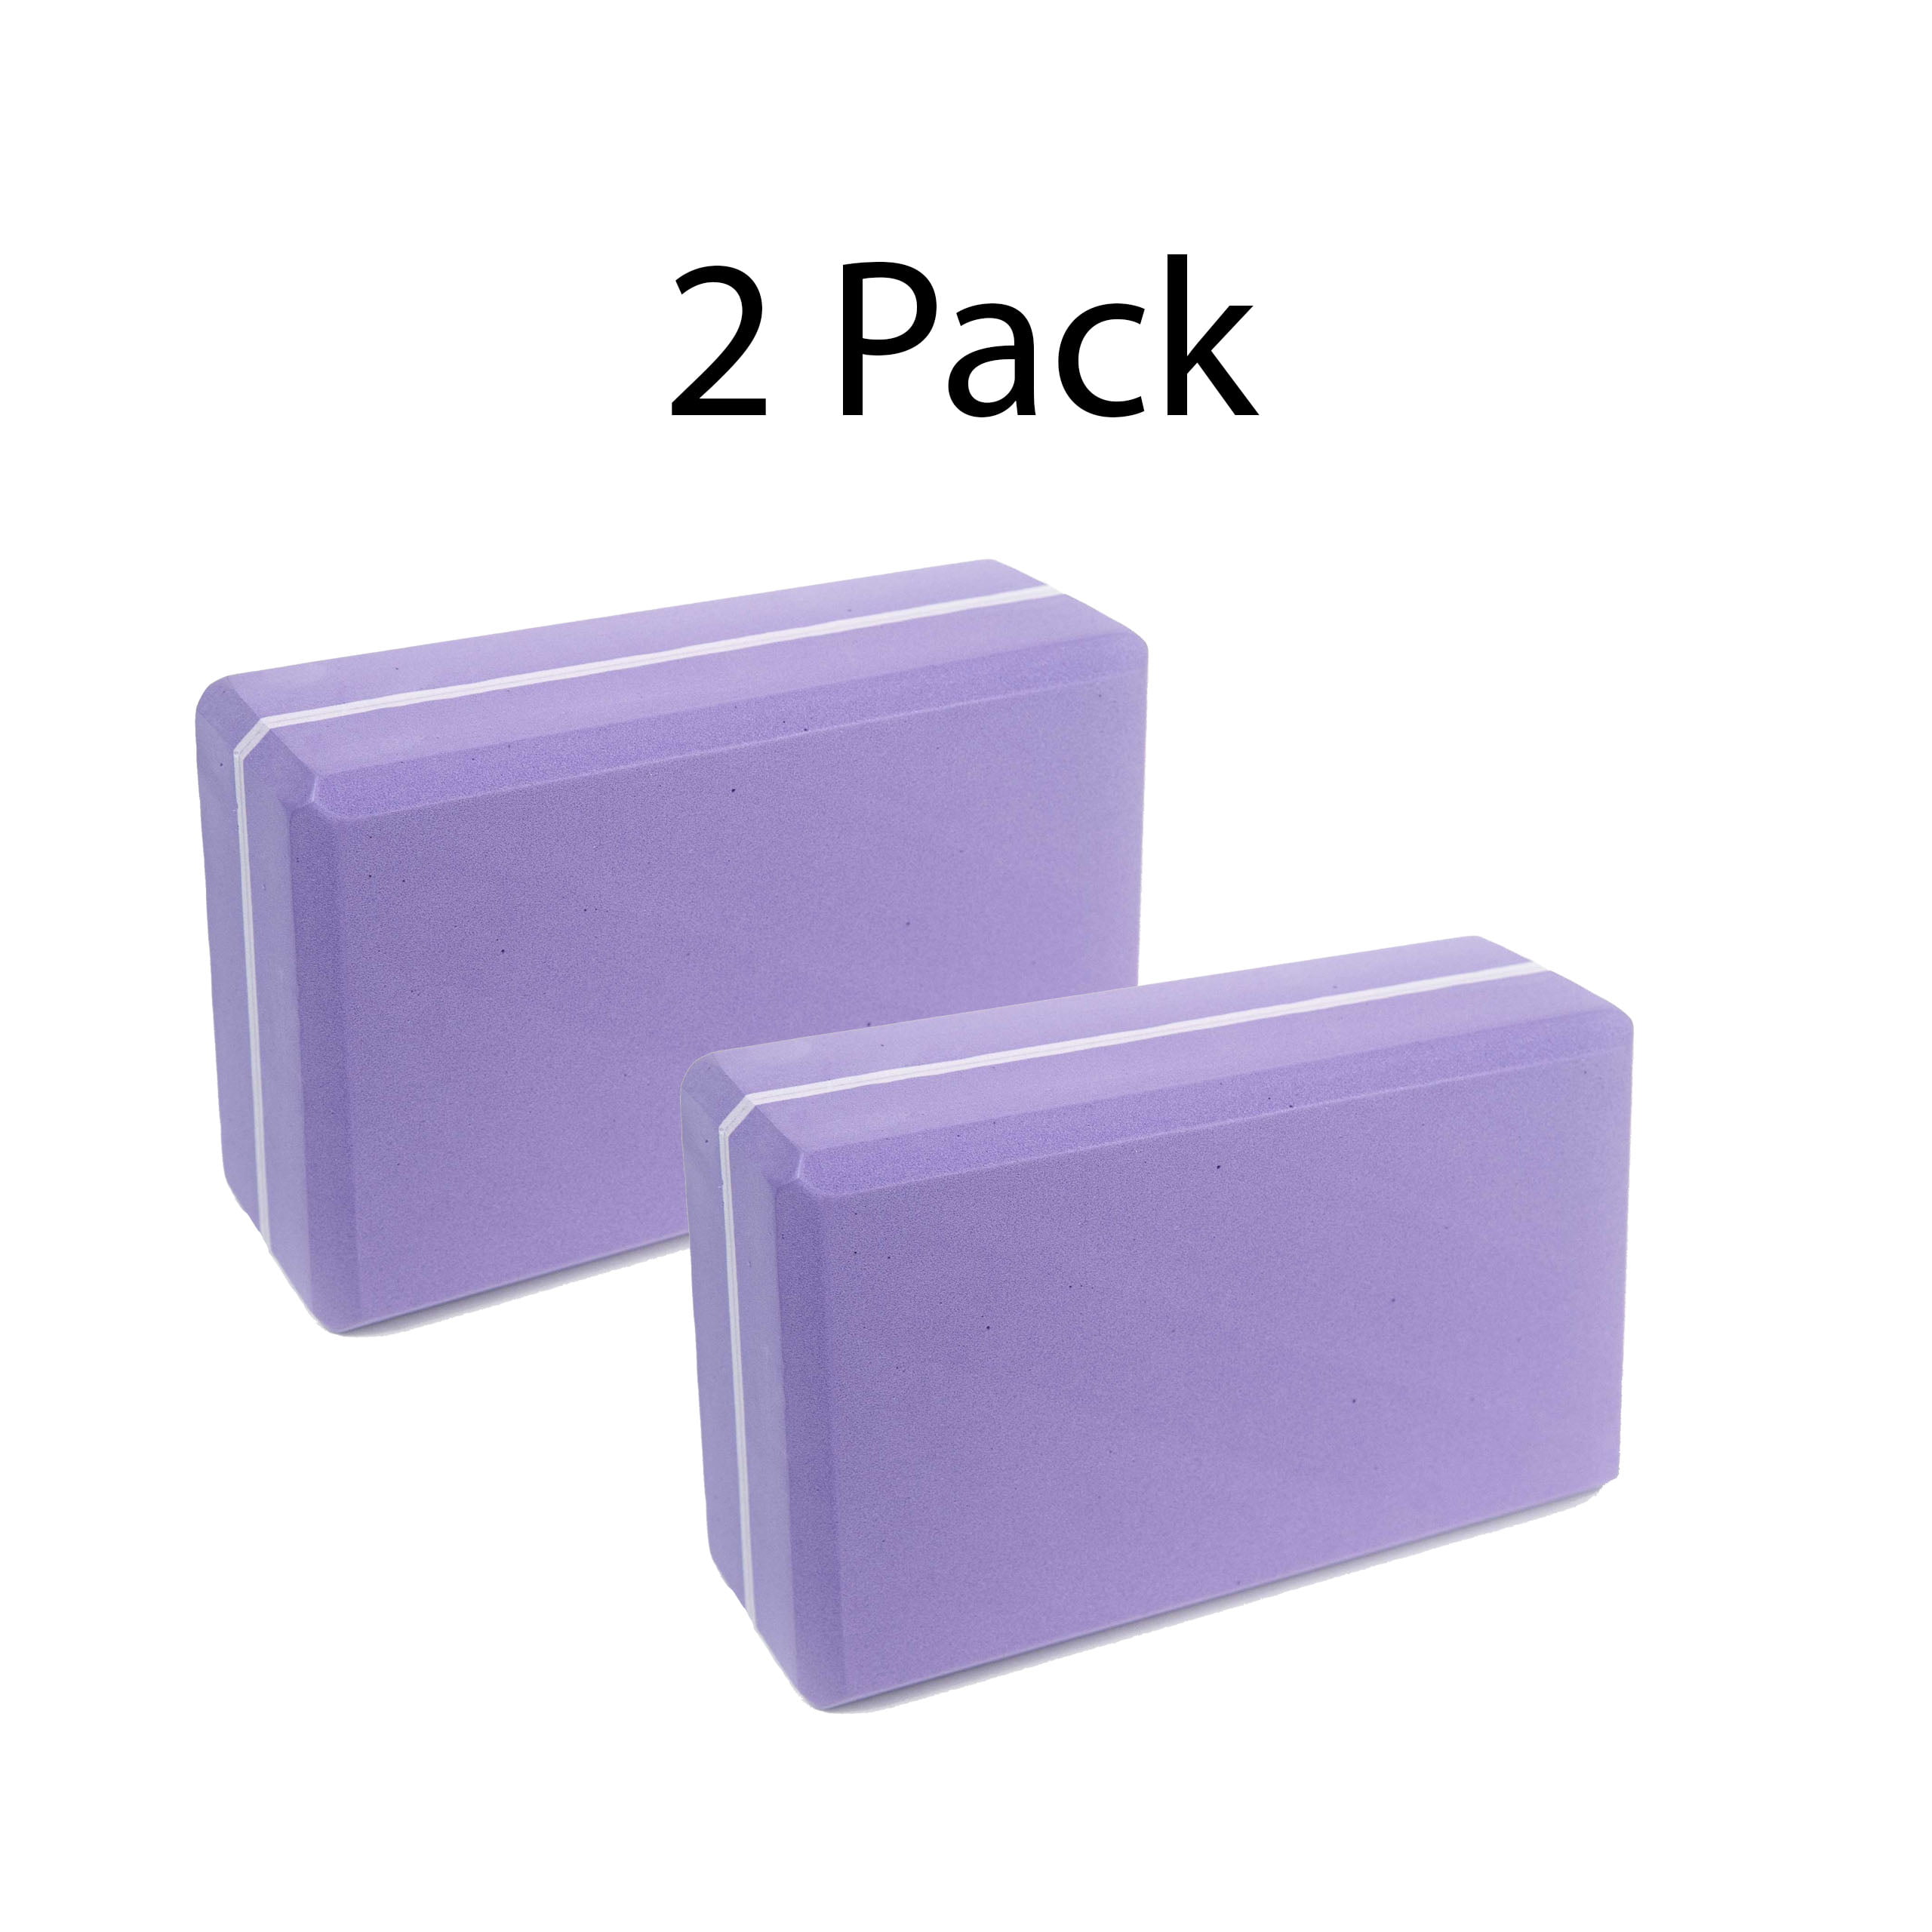 Yoga Block Set of 2 High Density Eco Friendly EVA Foam Brick Dual Color Yoga Blocks to Support and Deepen Poses 